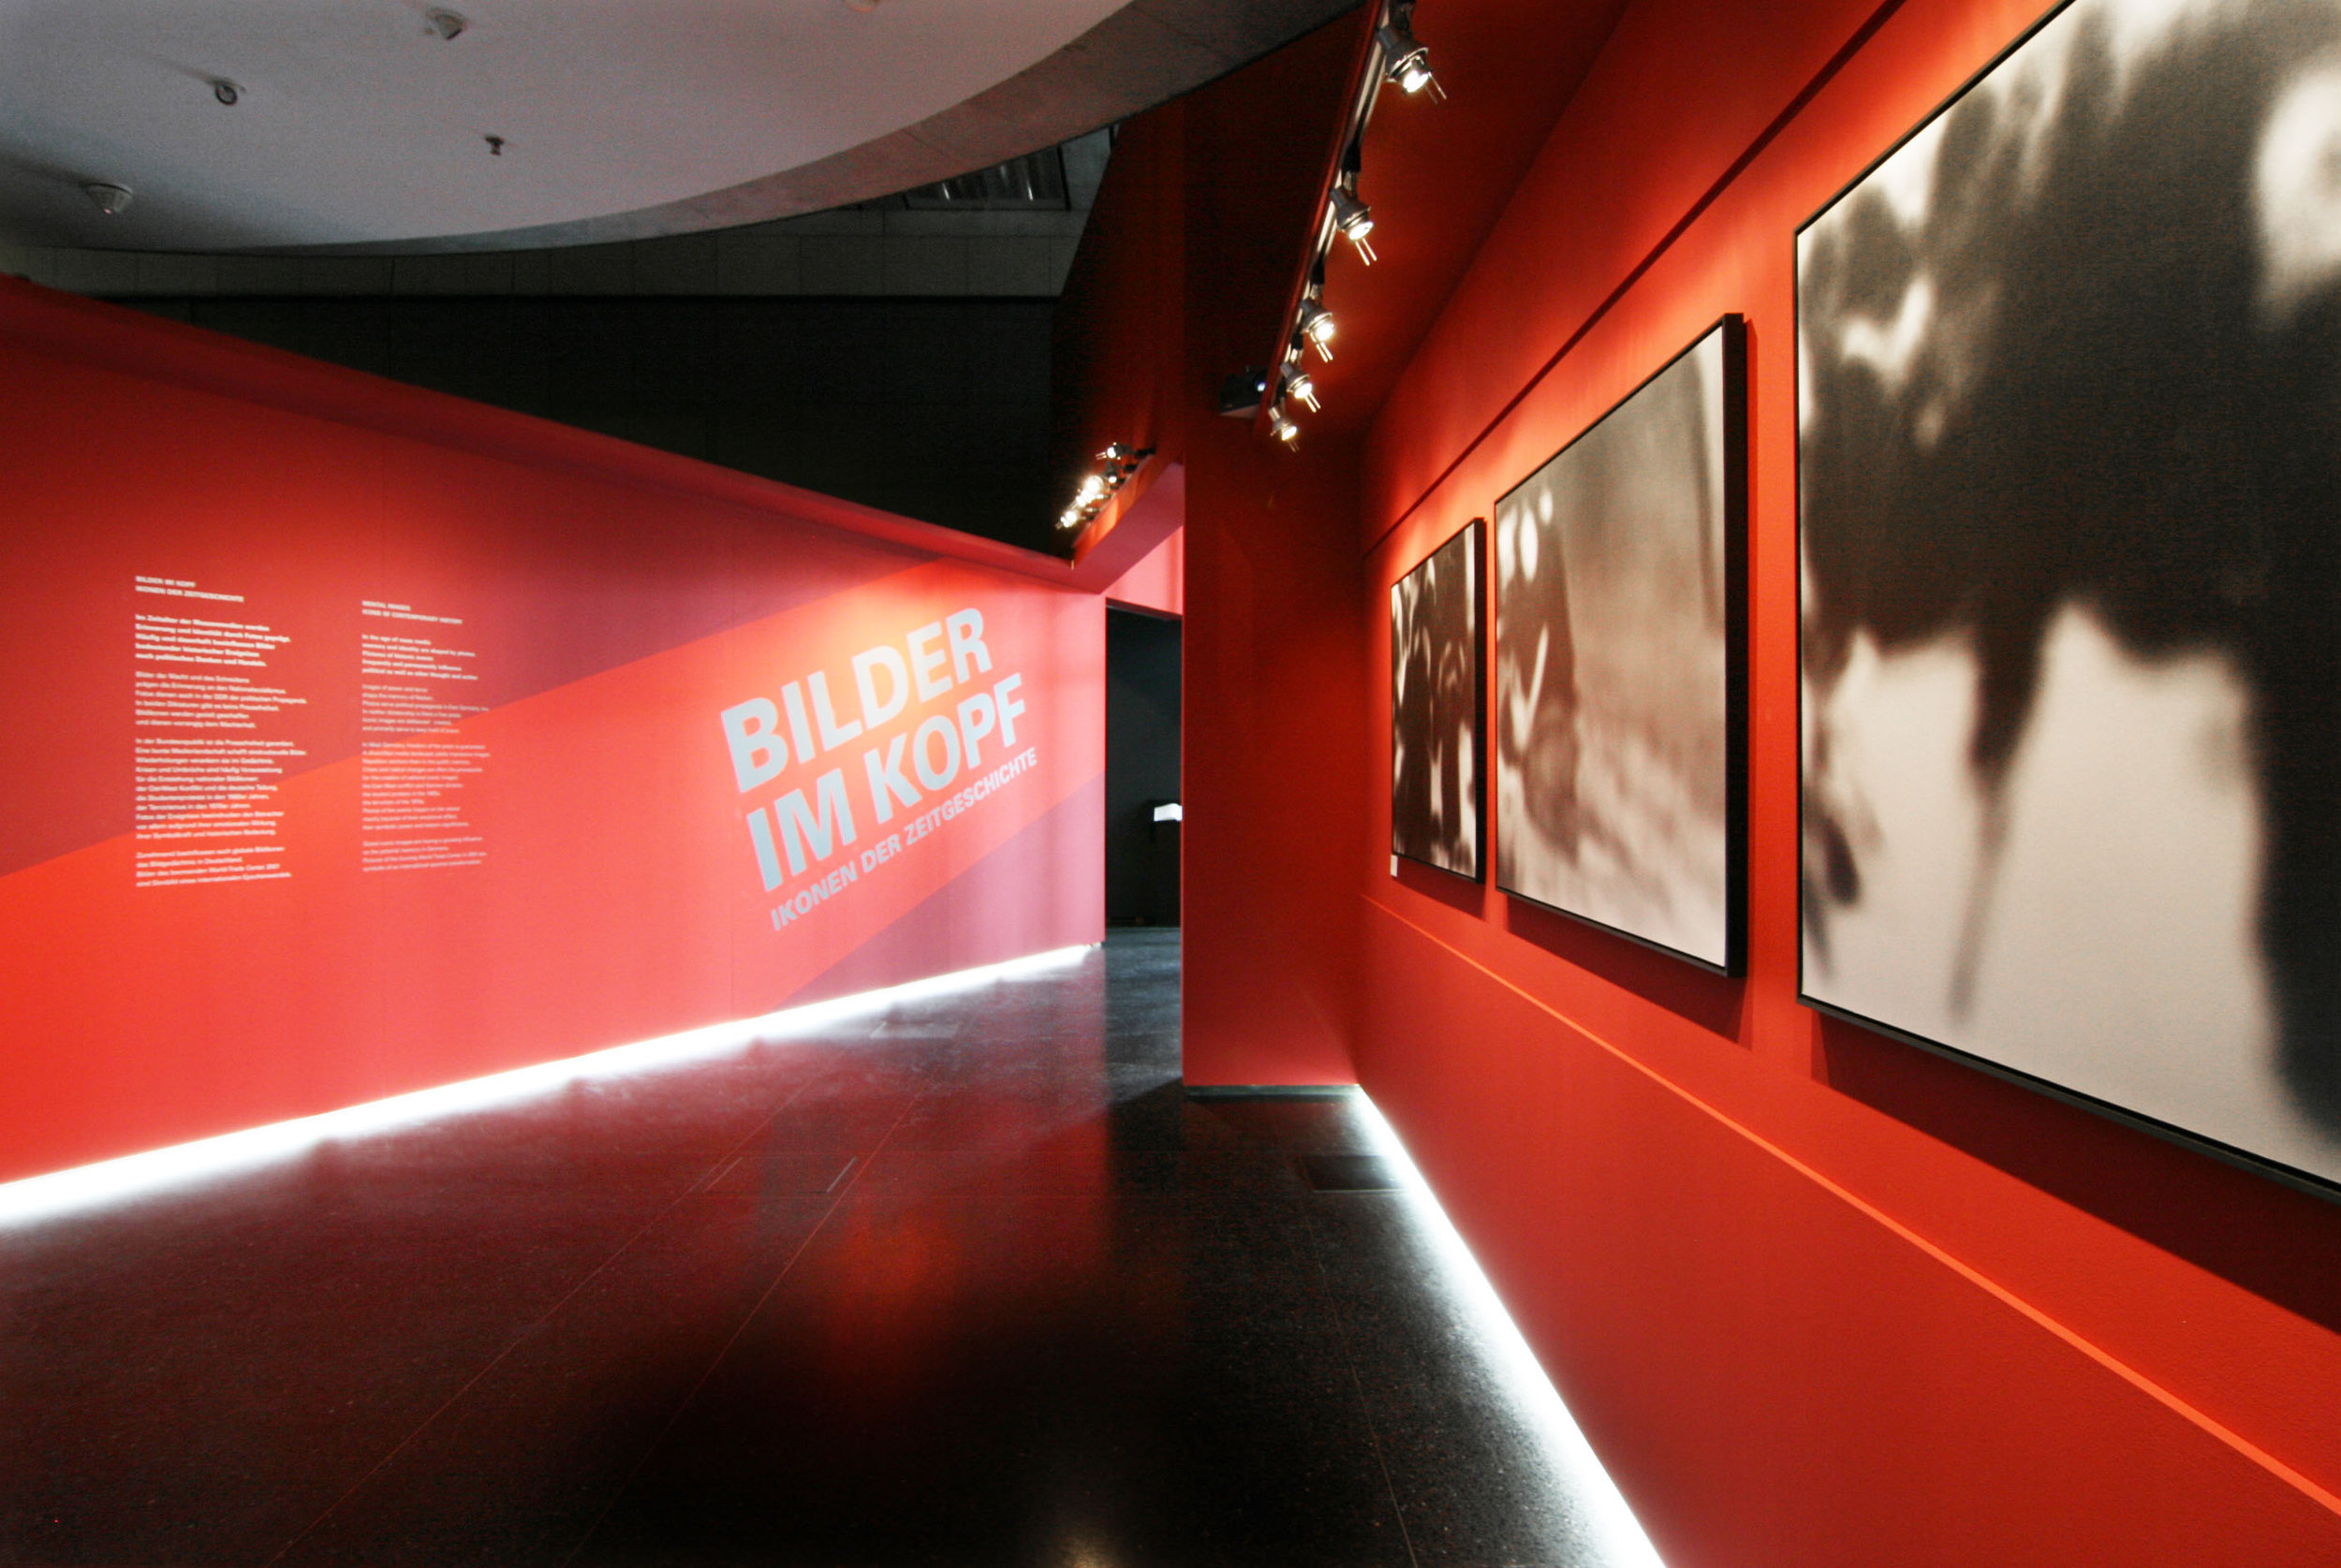 bilder-im-kopf_museum-exhibition-design_coordination-berlin_01.jpg